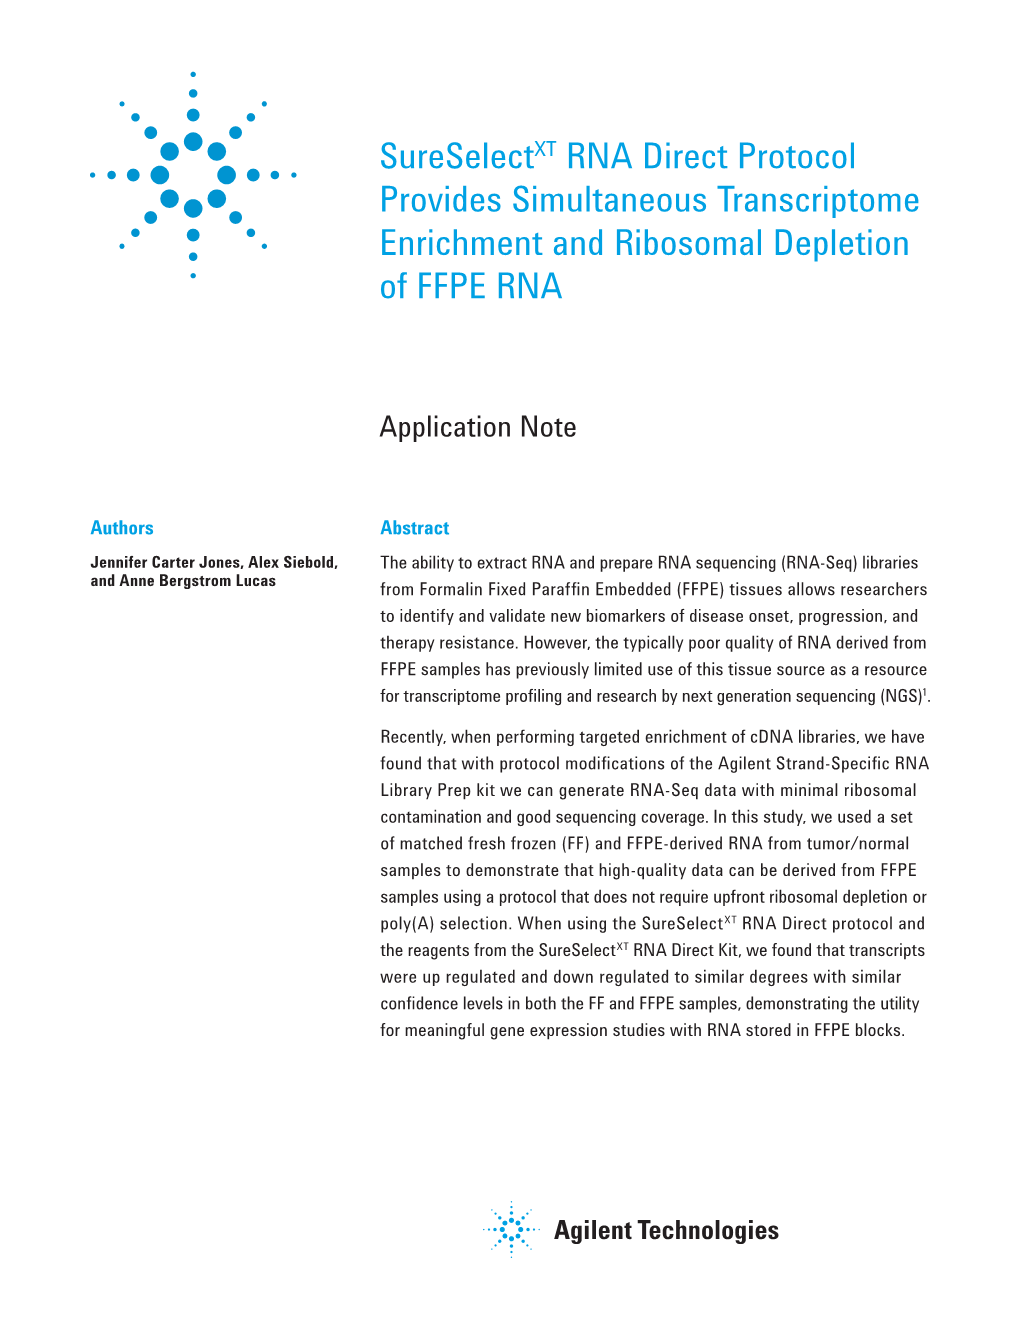 Sureselectxt RNA Direct Protocol Provides Simultaneous Transcriptome Enrichment and Ribosomal Depletion of FFPE RNA